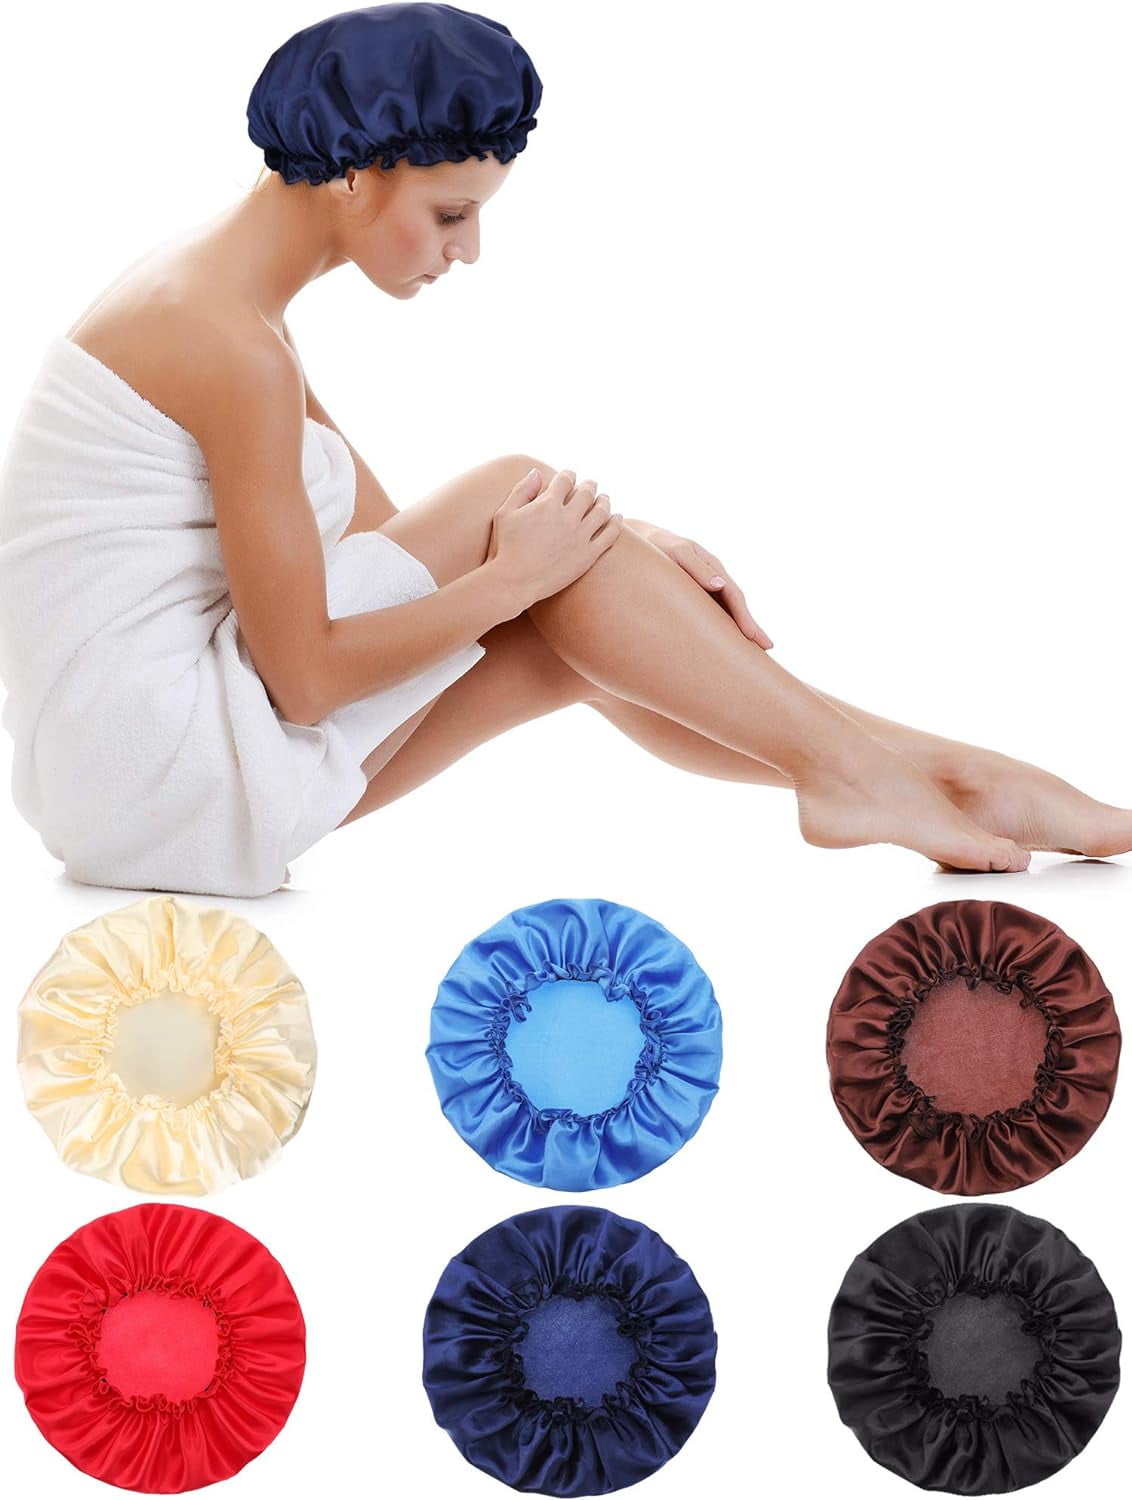 6 Pieces Sleep Cap Satin Bonnet Sleeping Hat Soft Elastic Night Hair Cover for Women Girls